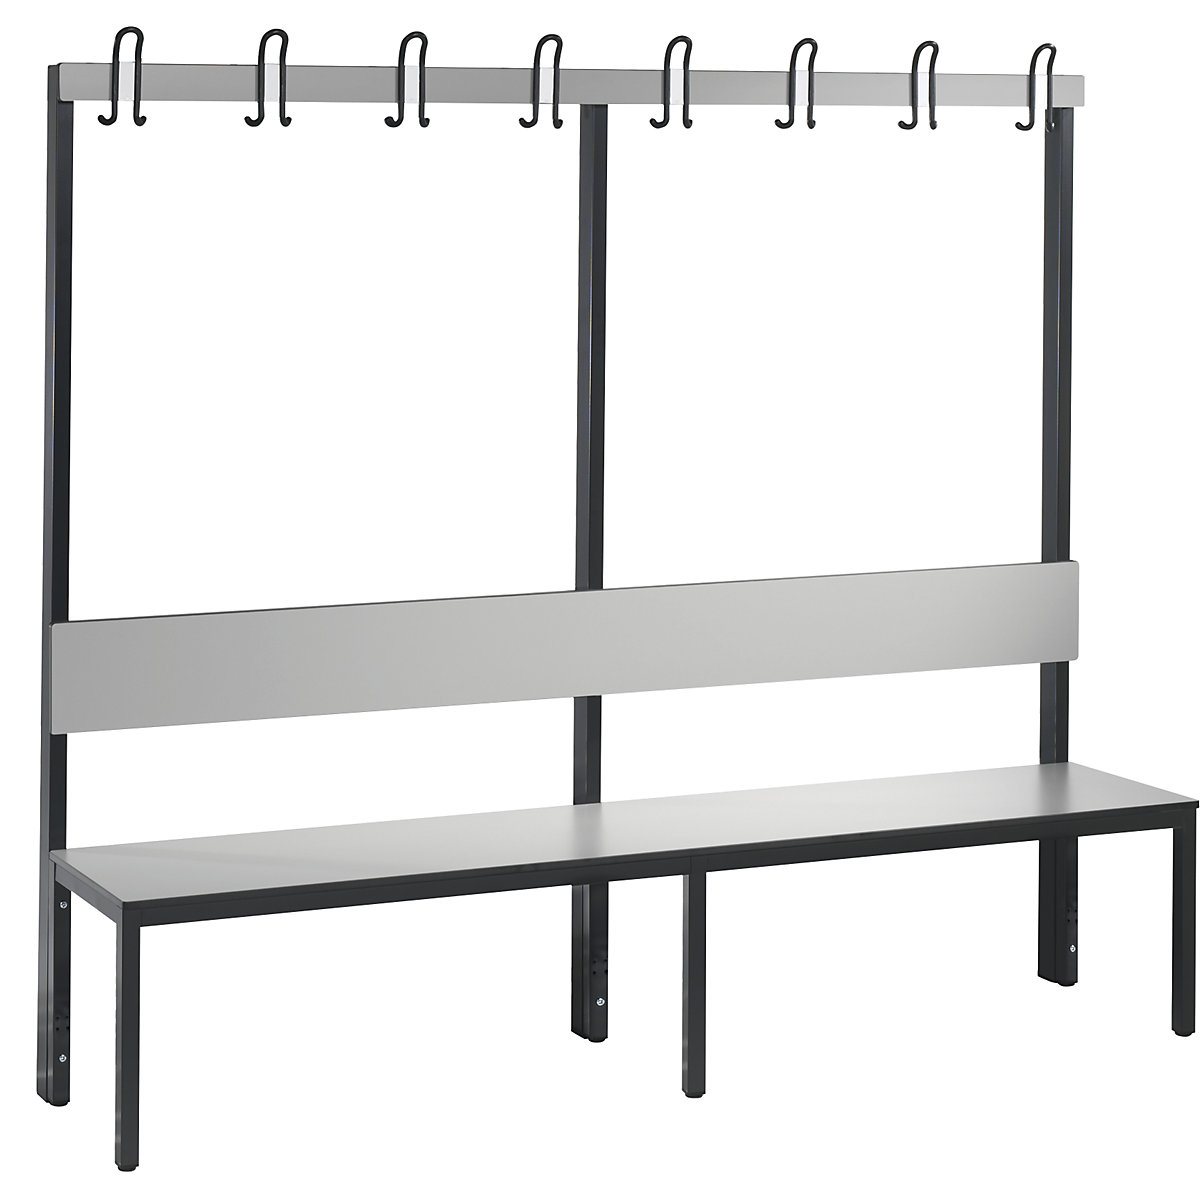 BASIC PLUS cloakroom bench, single sided – C+P, seat HPL, hook rail, length 1960 mm, silver grey-8